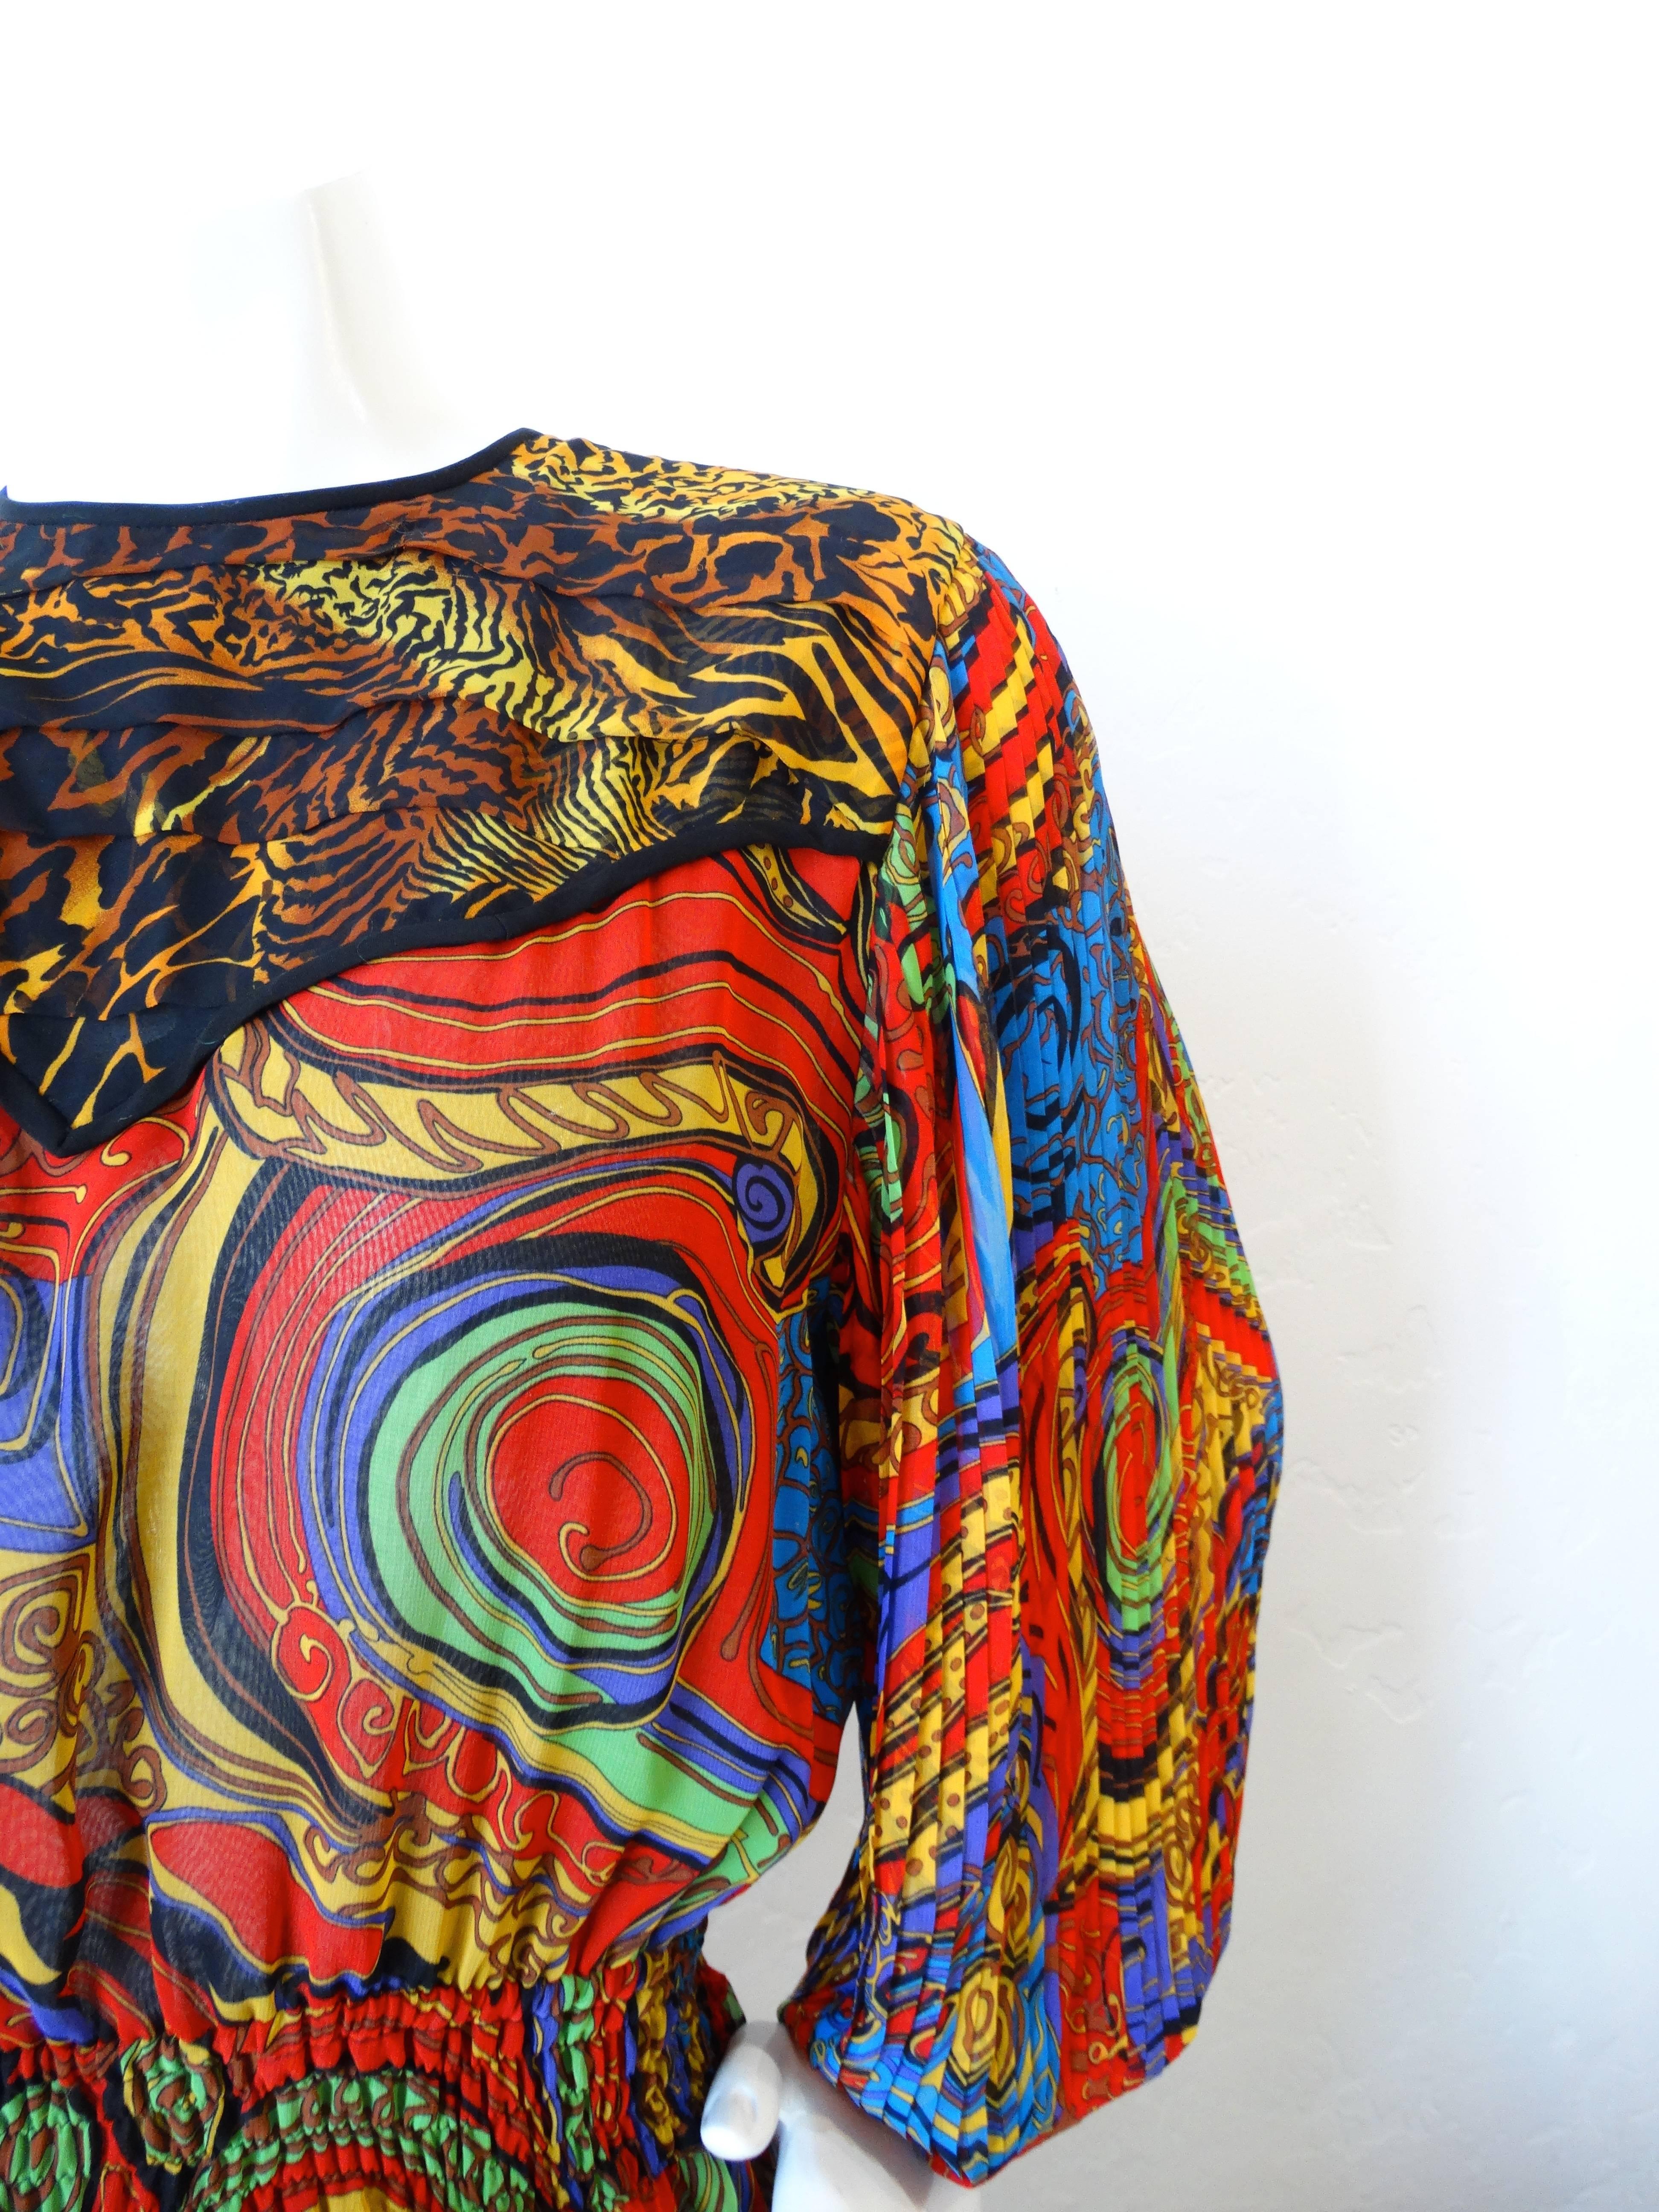 Diane Freis Leopard Swirl Printed Dress, 1980s 2